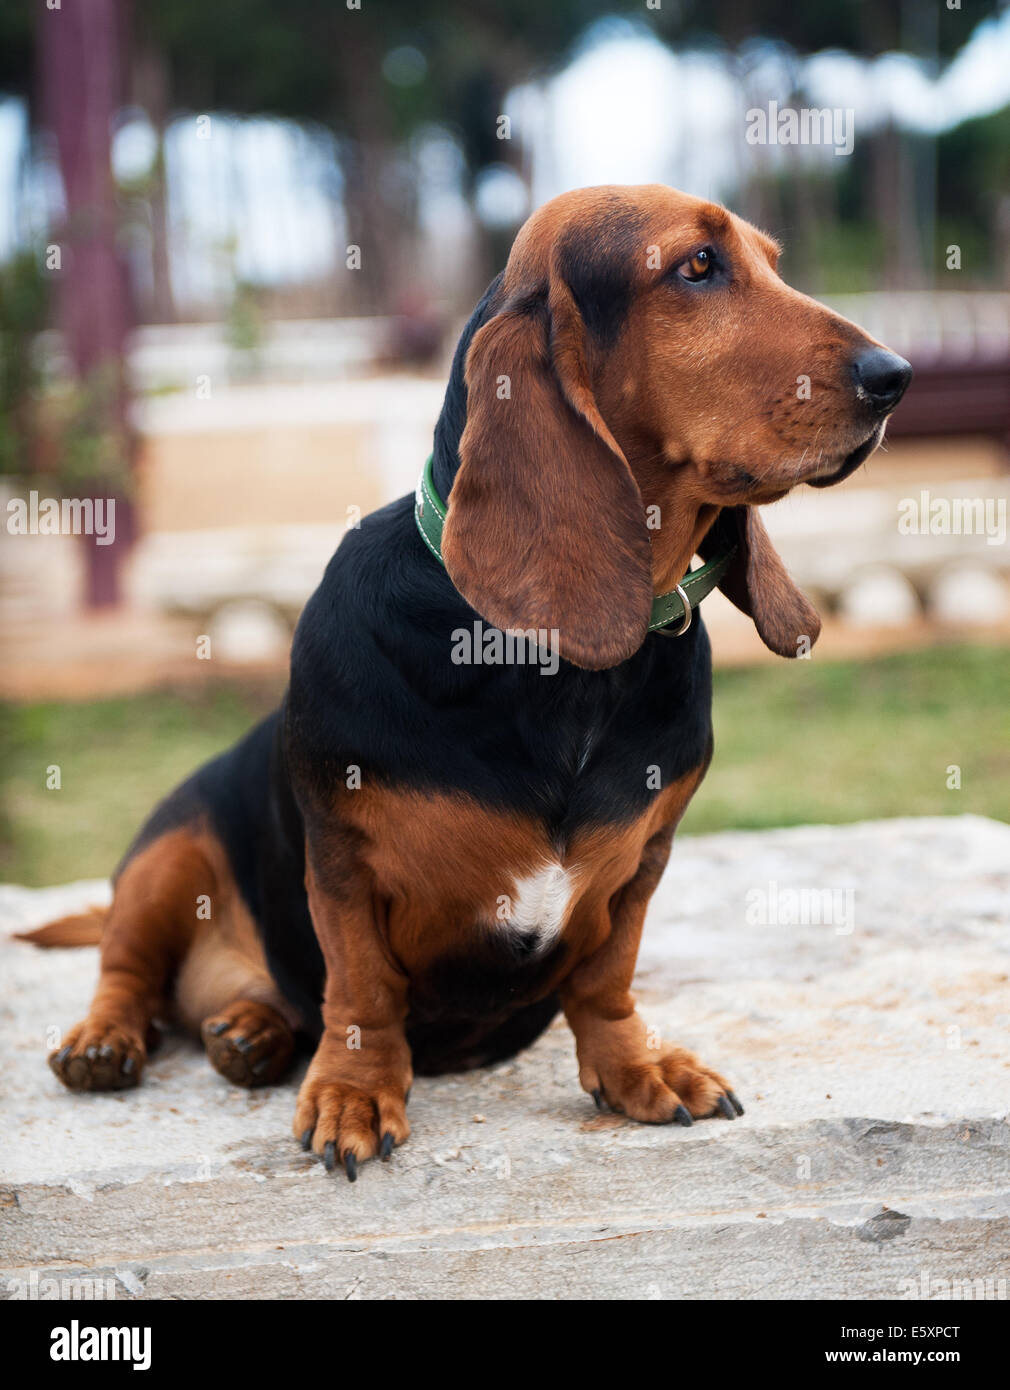 Portrait of a beautiful big brown dog Stock Photo